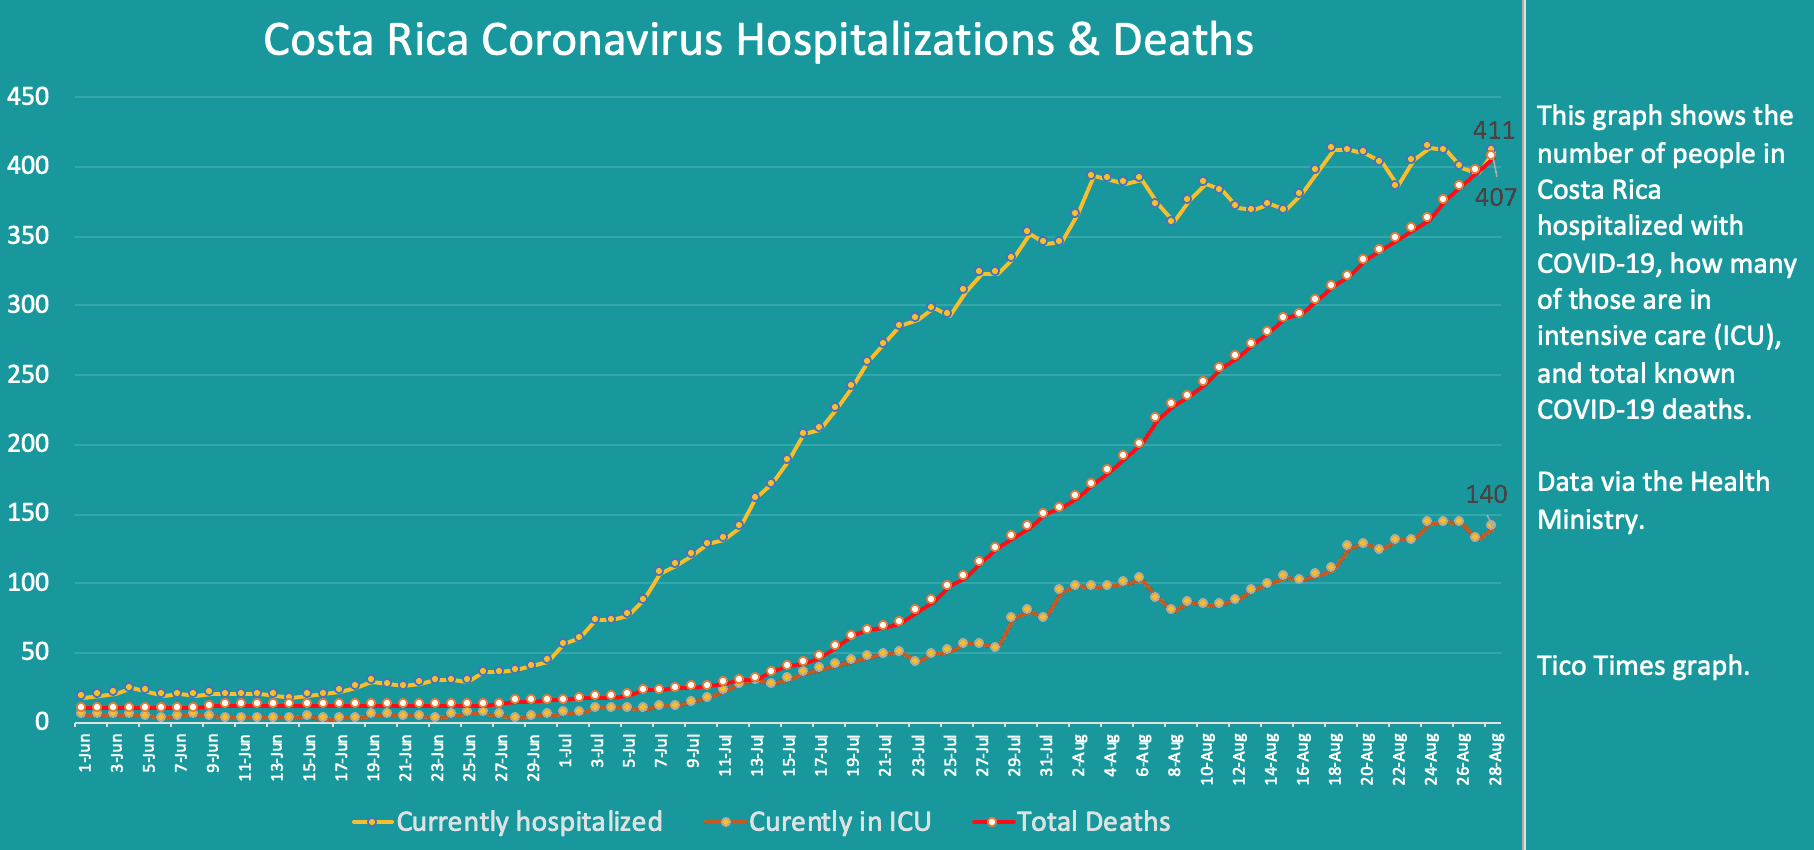 Costa Rica coronavirus hospitalizations and deaths on August 28, 2020